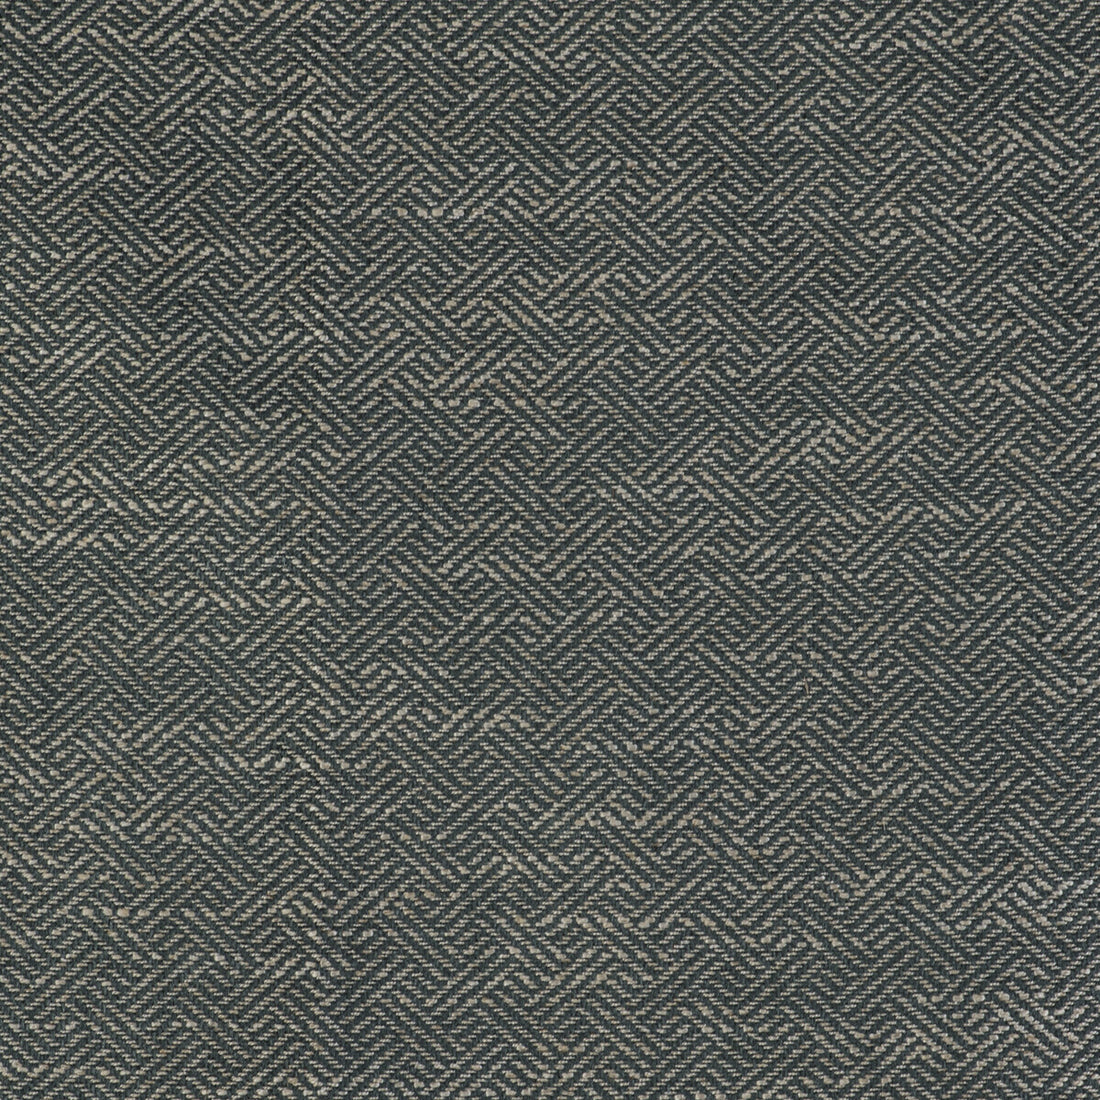 Enea fabric in oceano color - pattern GDT5518.010.0 - by Gaston y Daniela in the Gaston Libreria collection